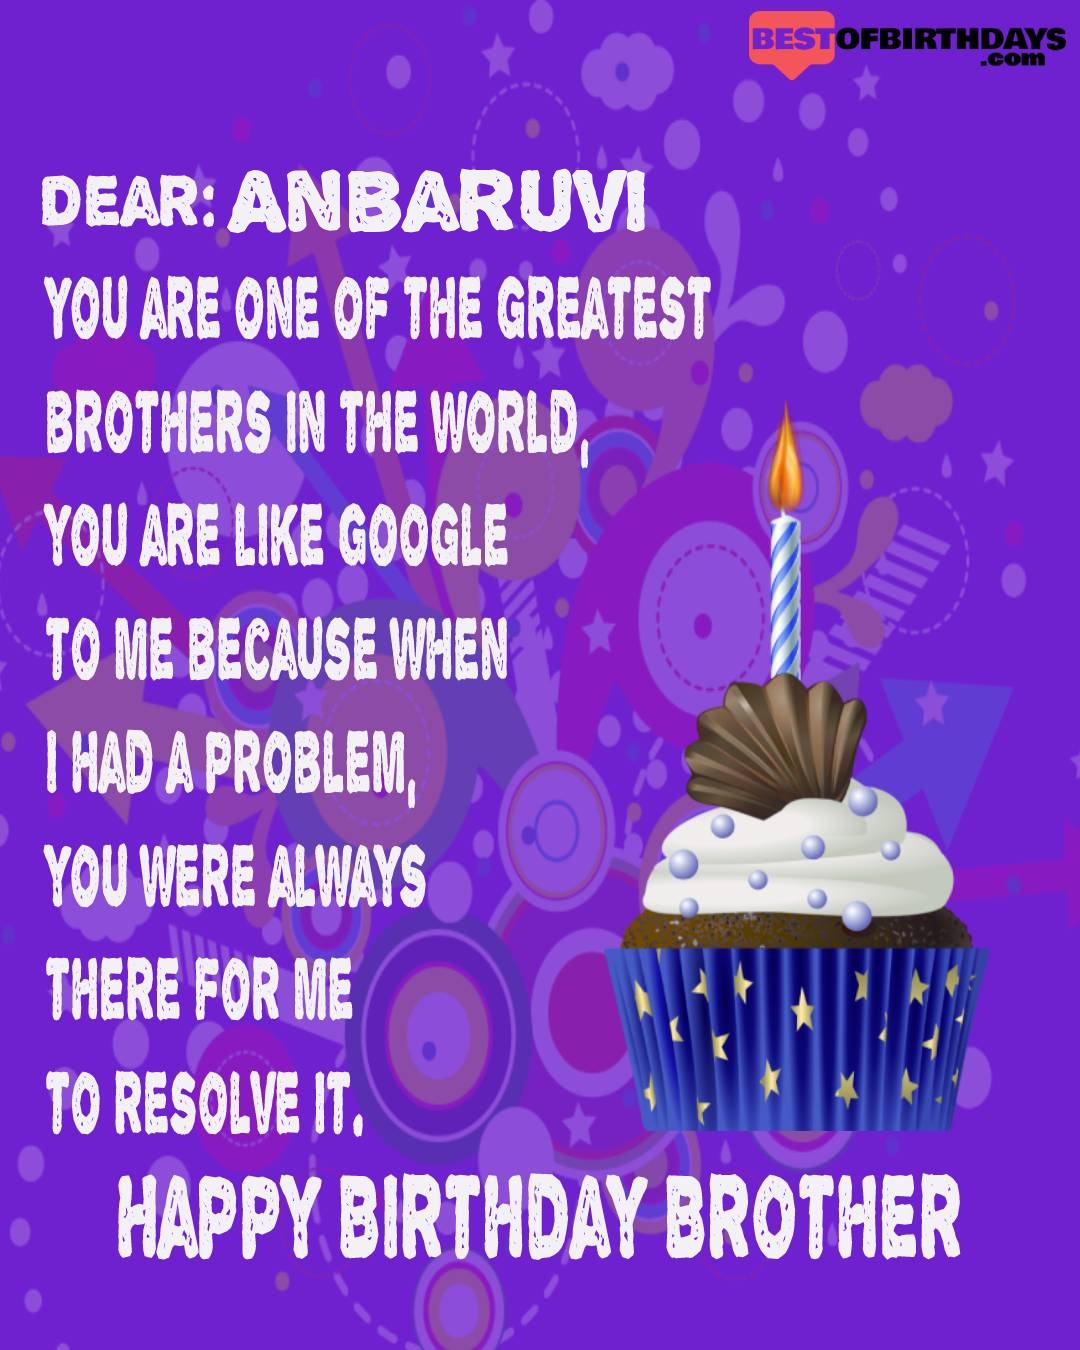 Happy birthday anbaruvi bhai brother bro